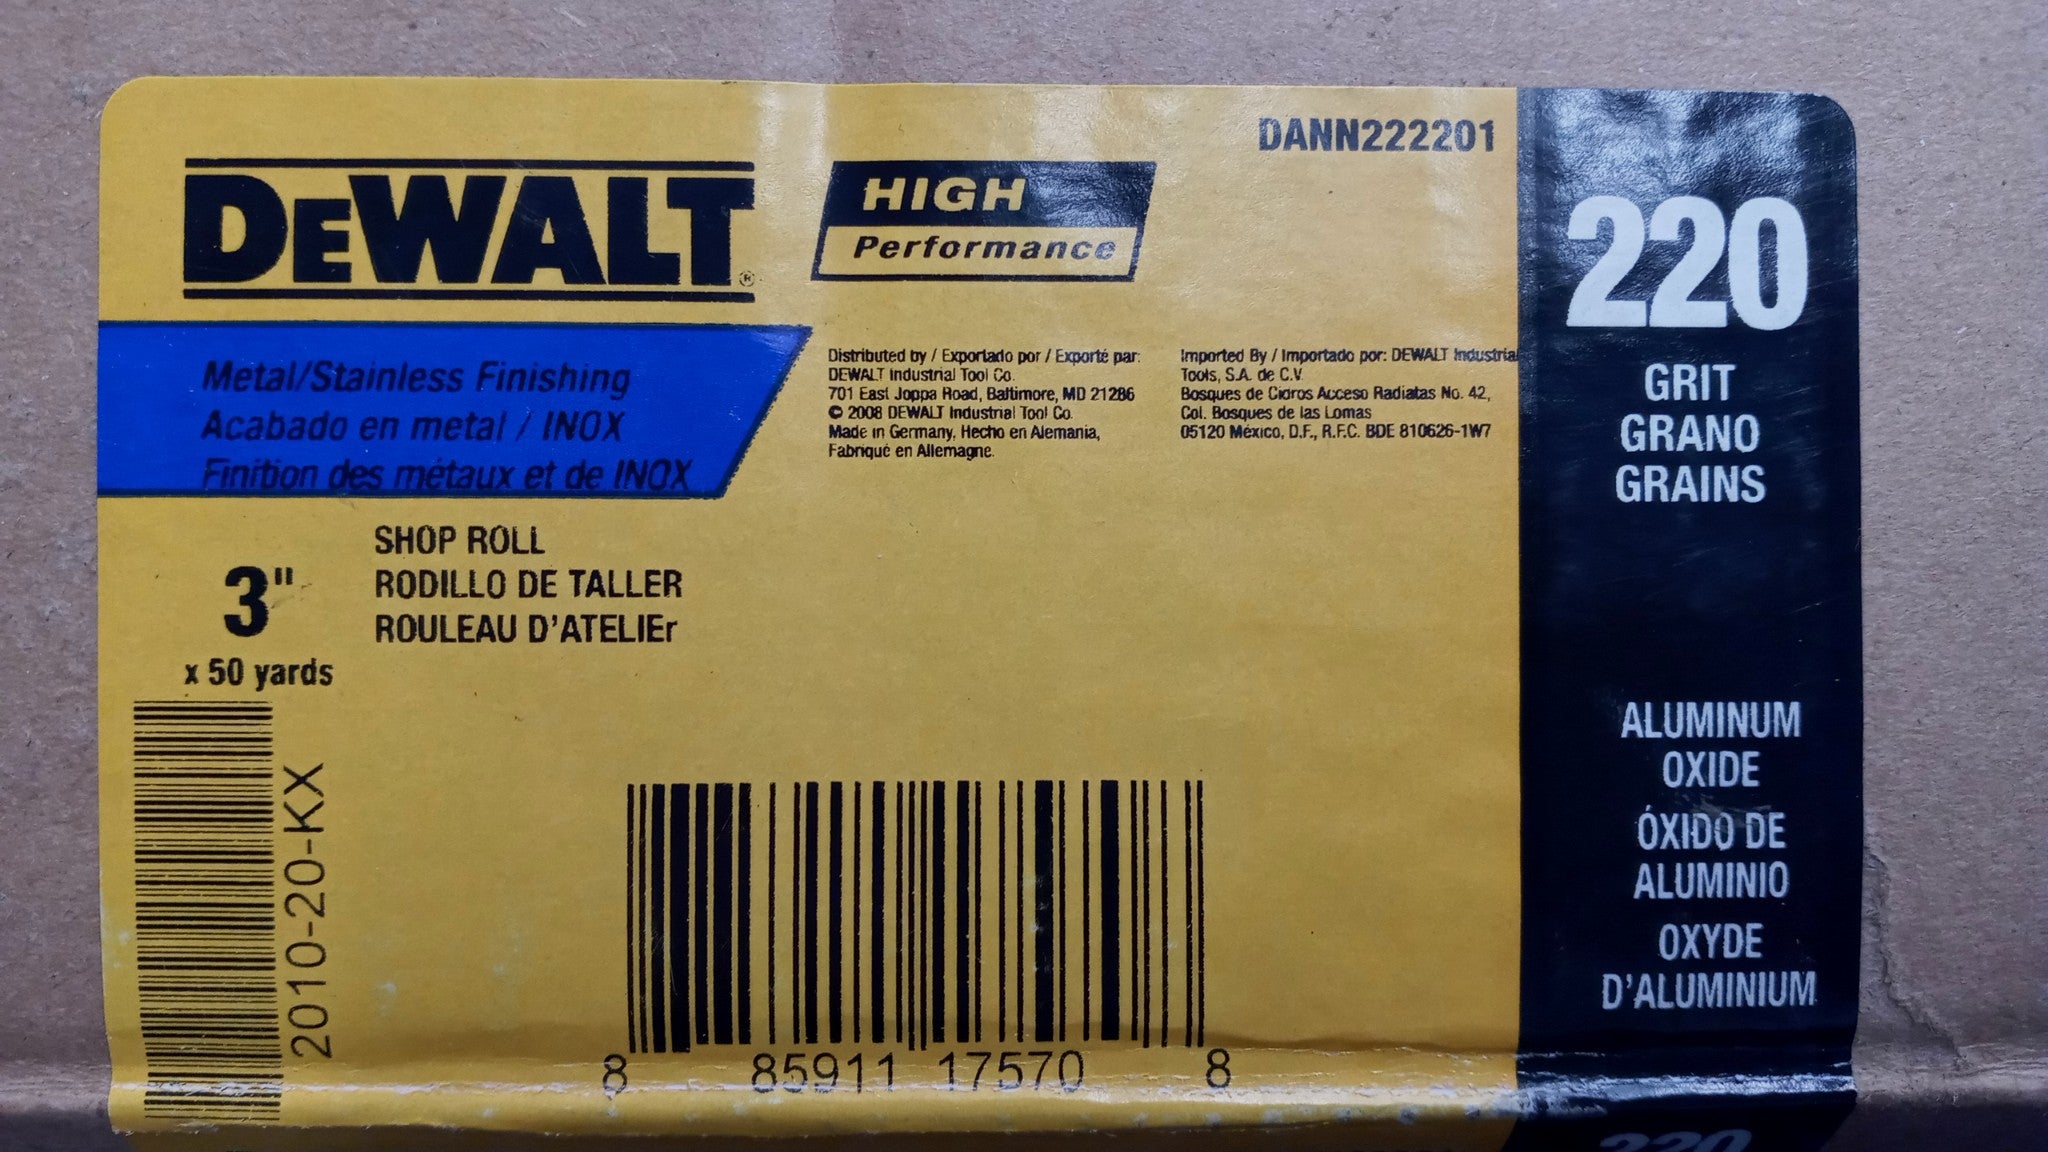 Dewalt DANN222201 Metal/Stainless Finishing Shop Roll Aluminum 3"x50yds 220grit